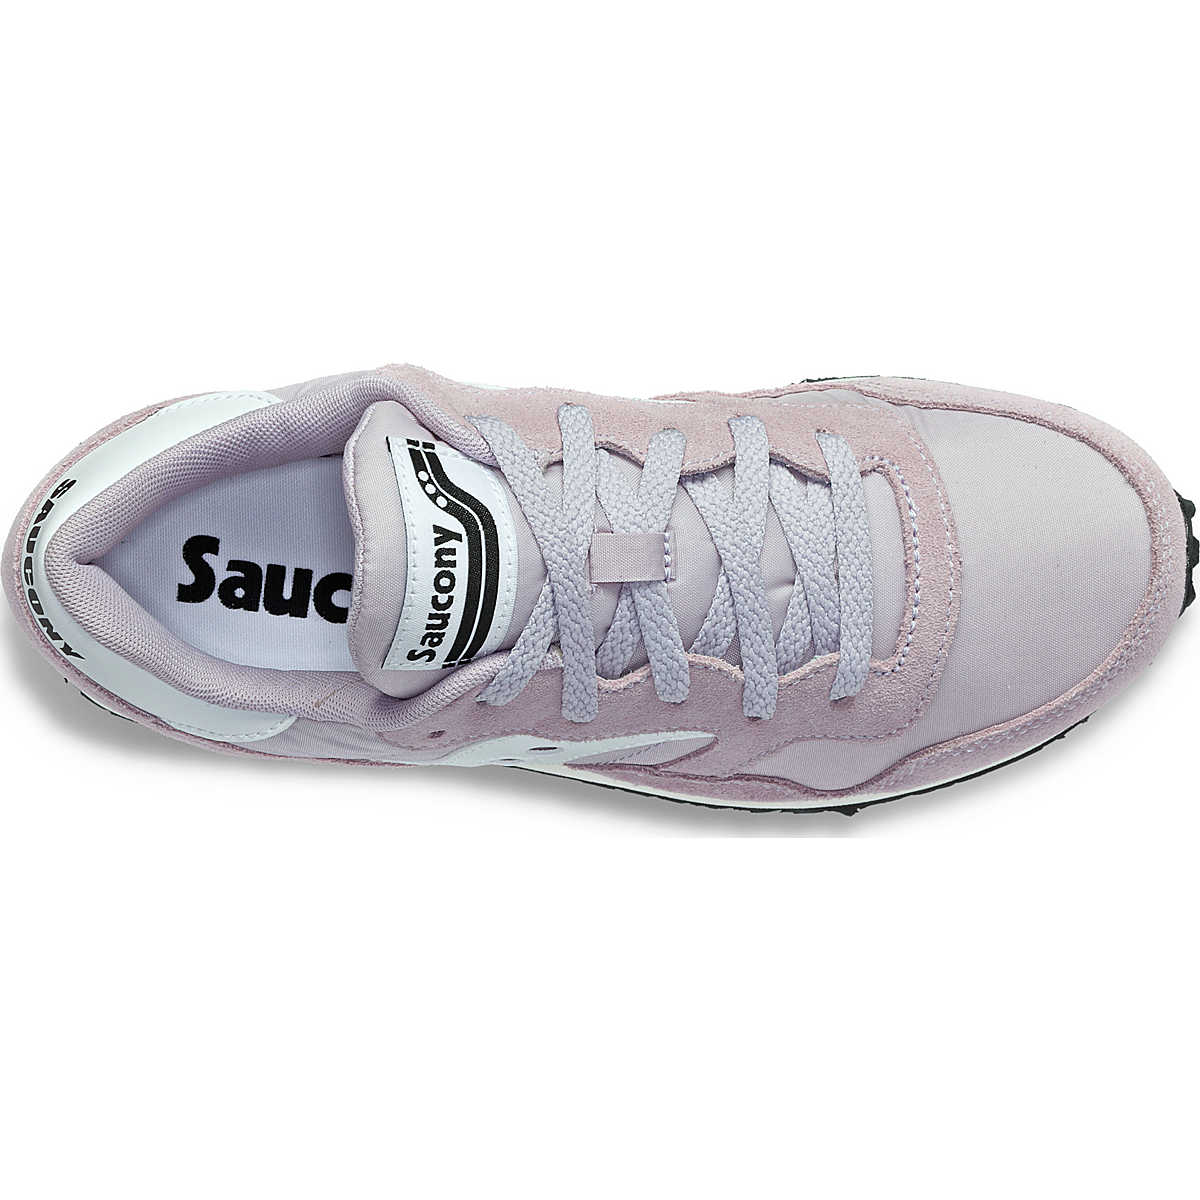 Saucony Originals DXN Trainer Gray White S70757-6 New Men's Retro Sneakers Size 11.5